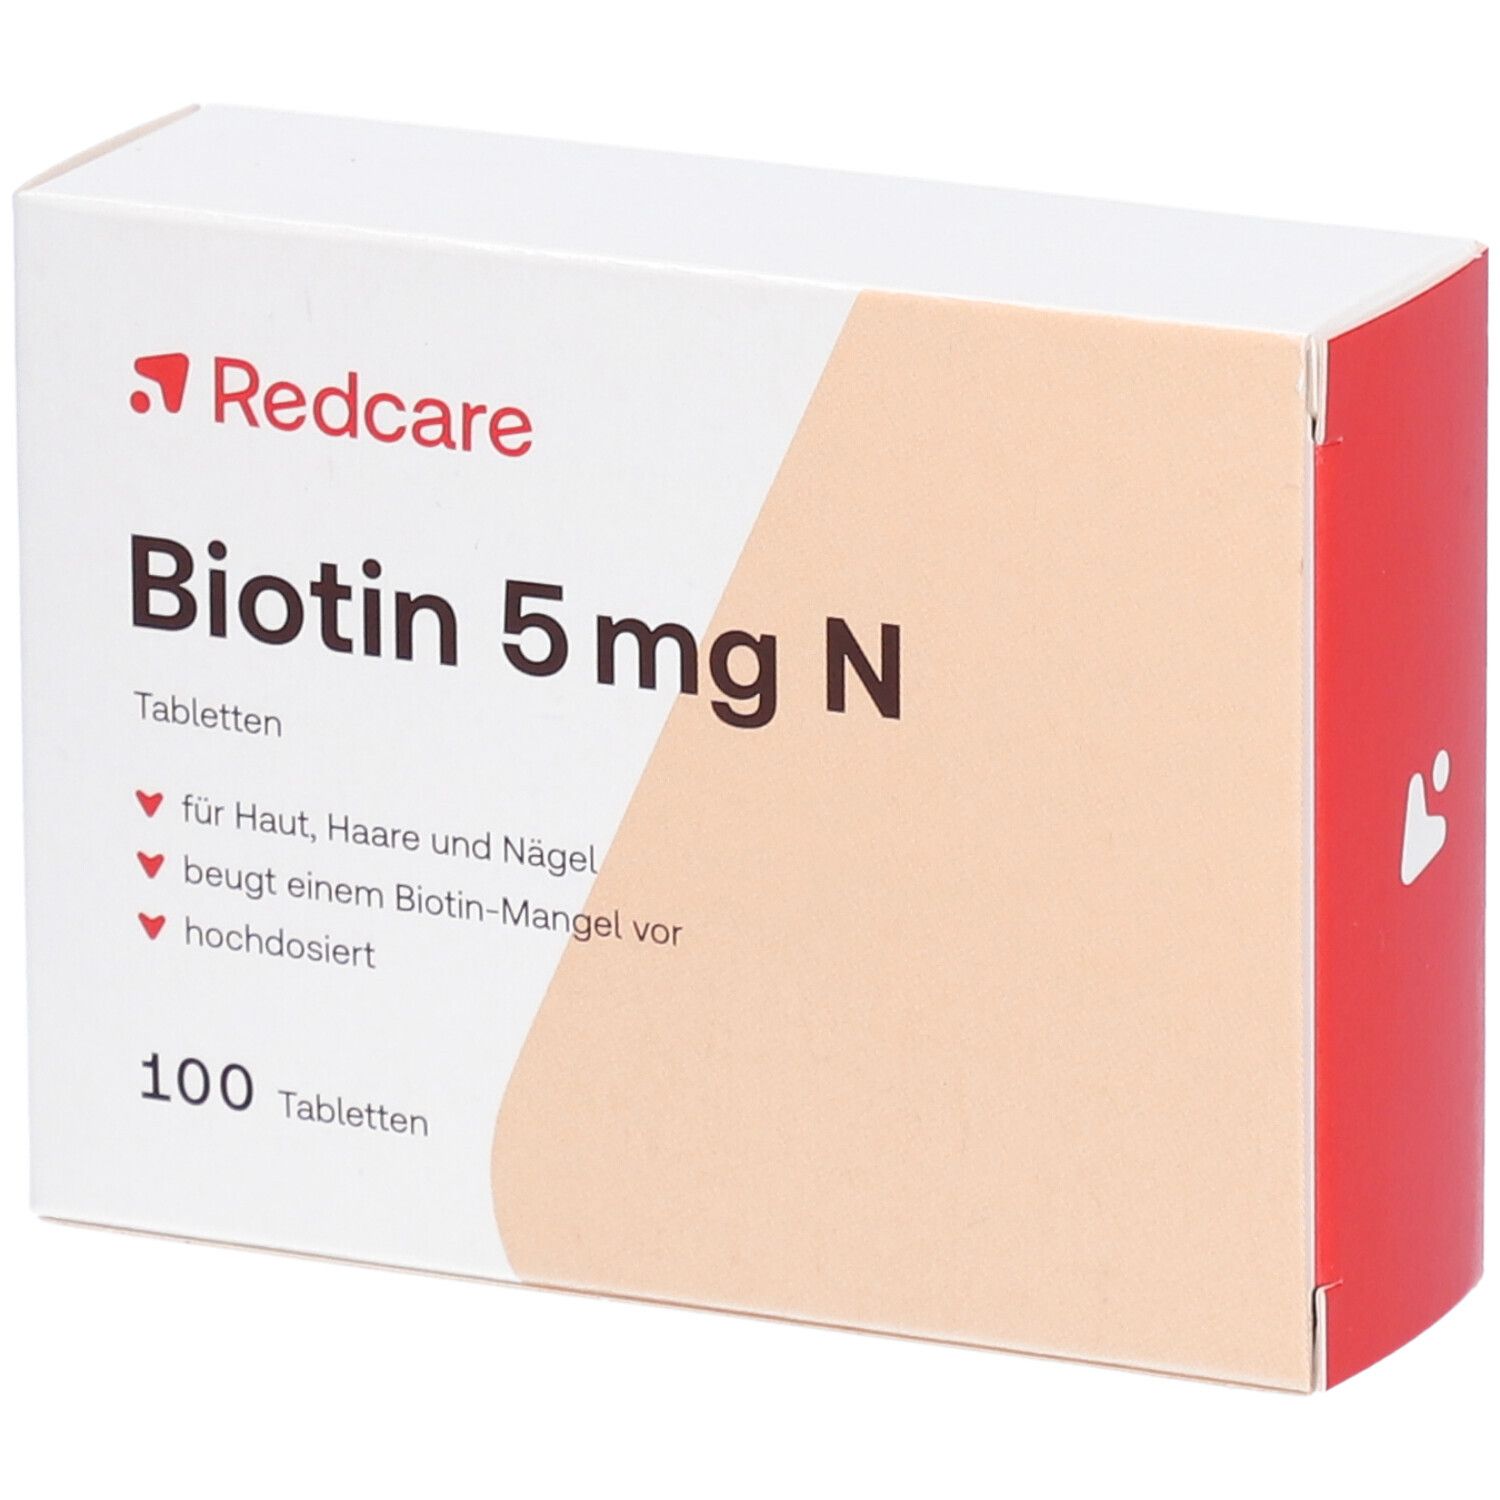 BIOTIN 5 mg N RedCare